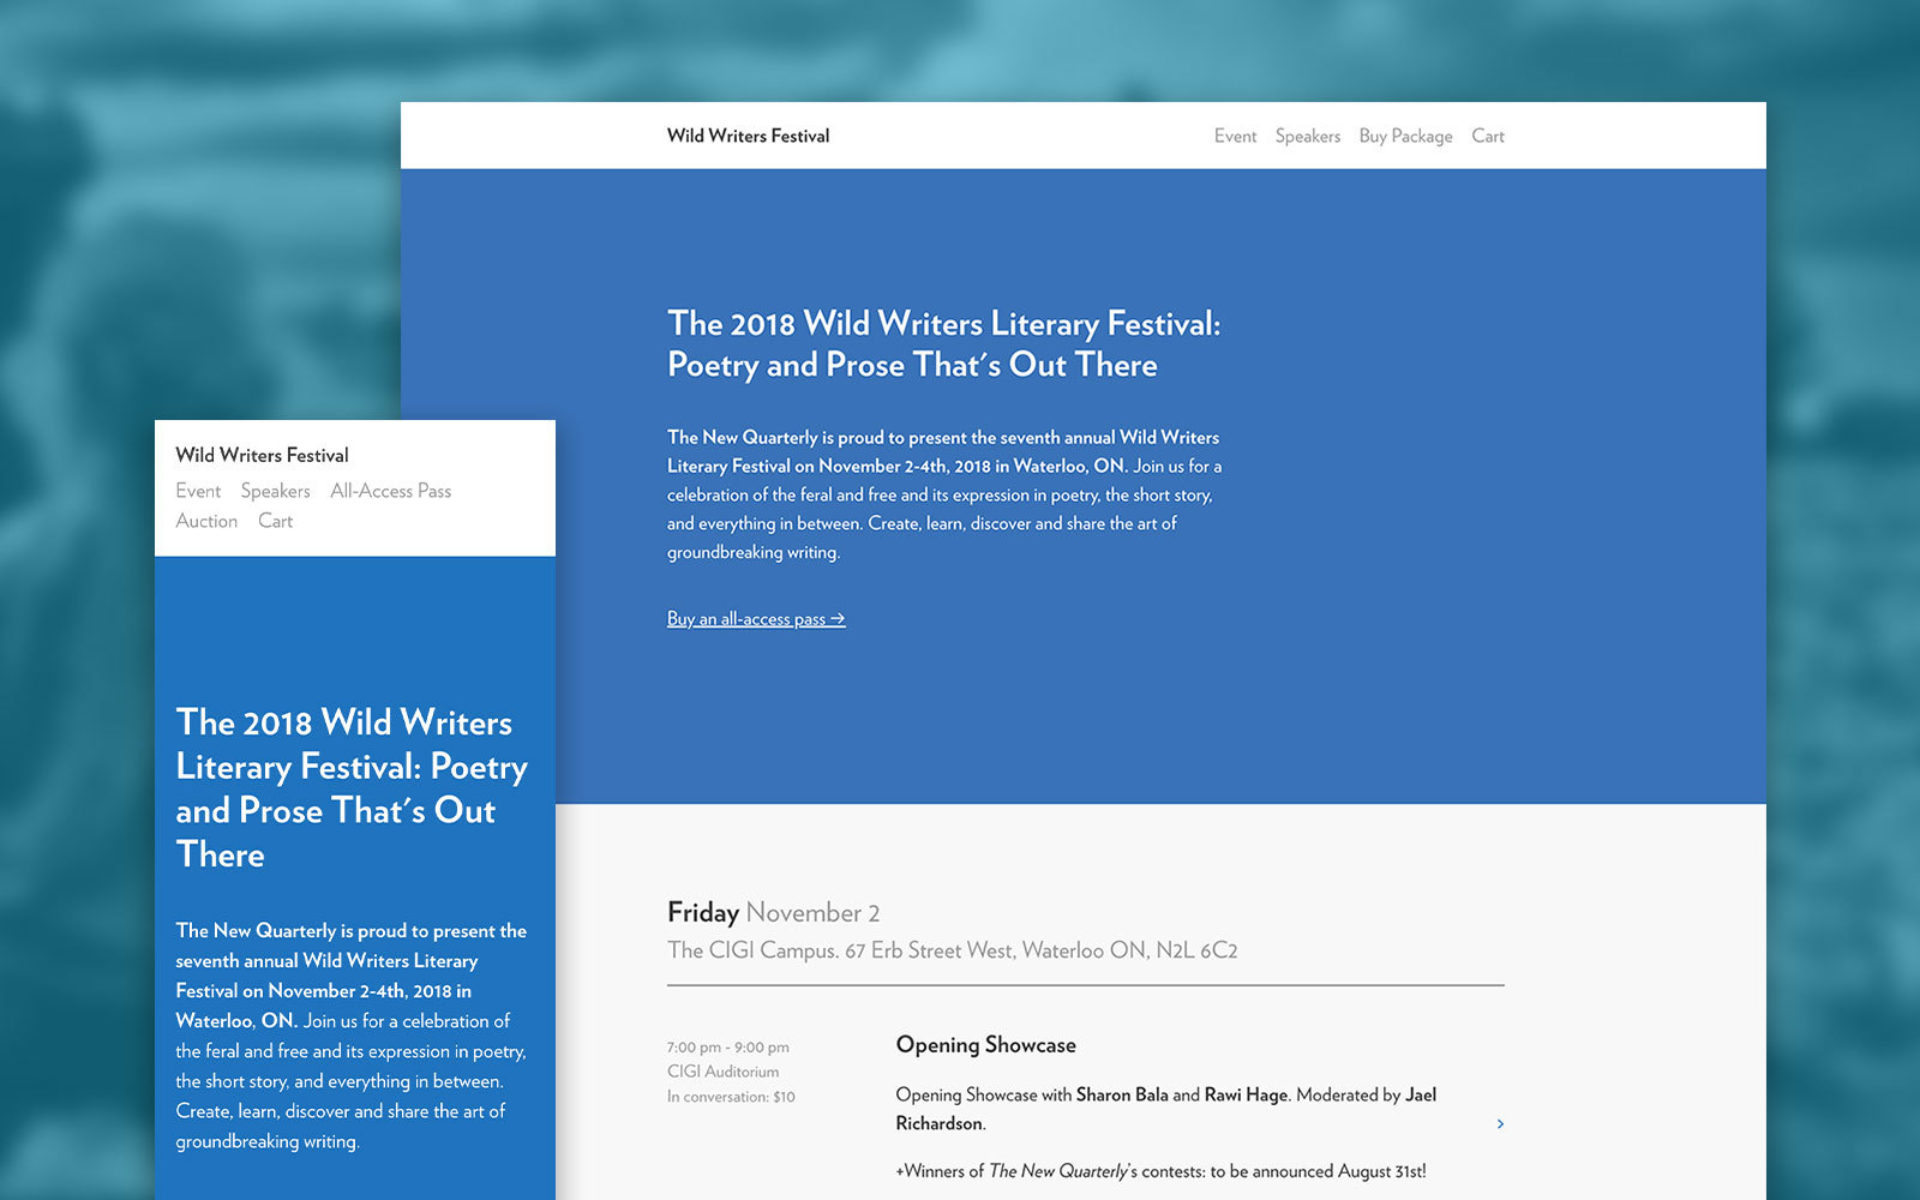 The Wild Writers website